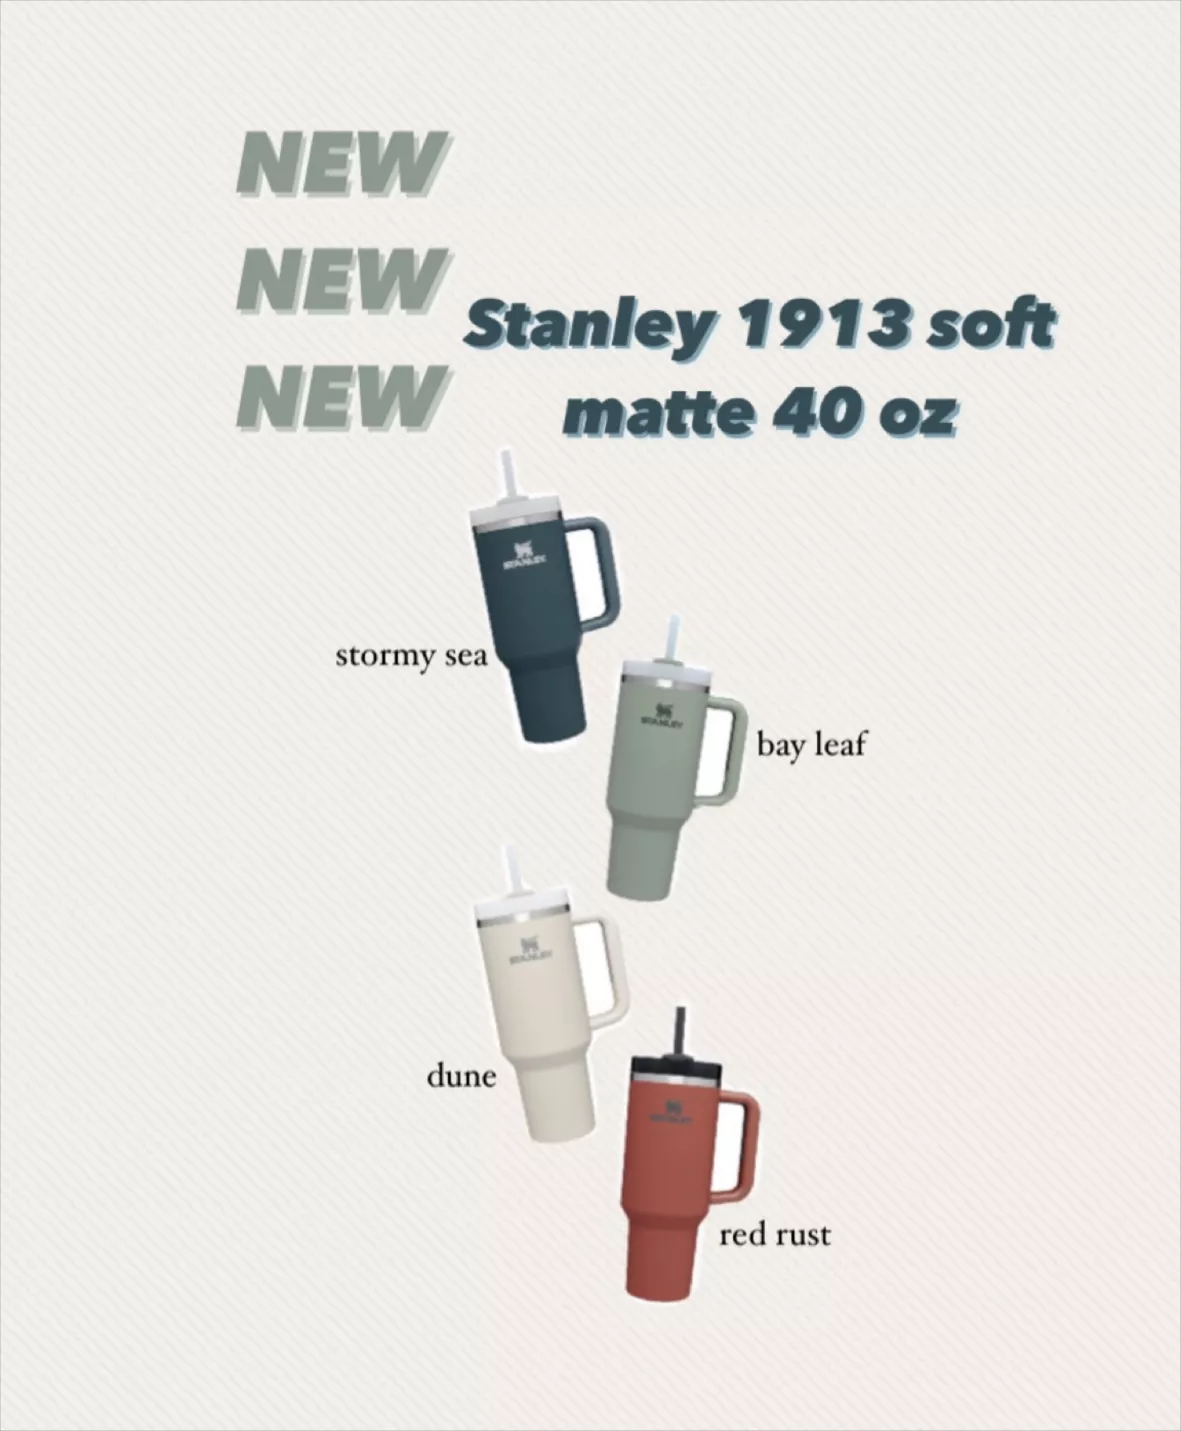 Stanley Soft Matte, Stanley Stormy Sea Bling, Stanley Bling, H2.0, 40 Oz 